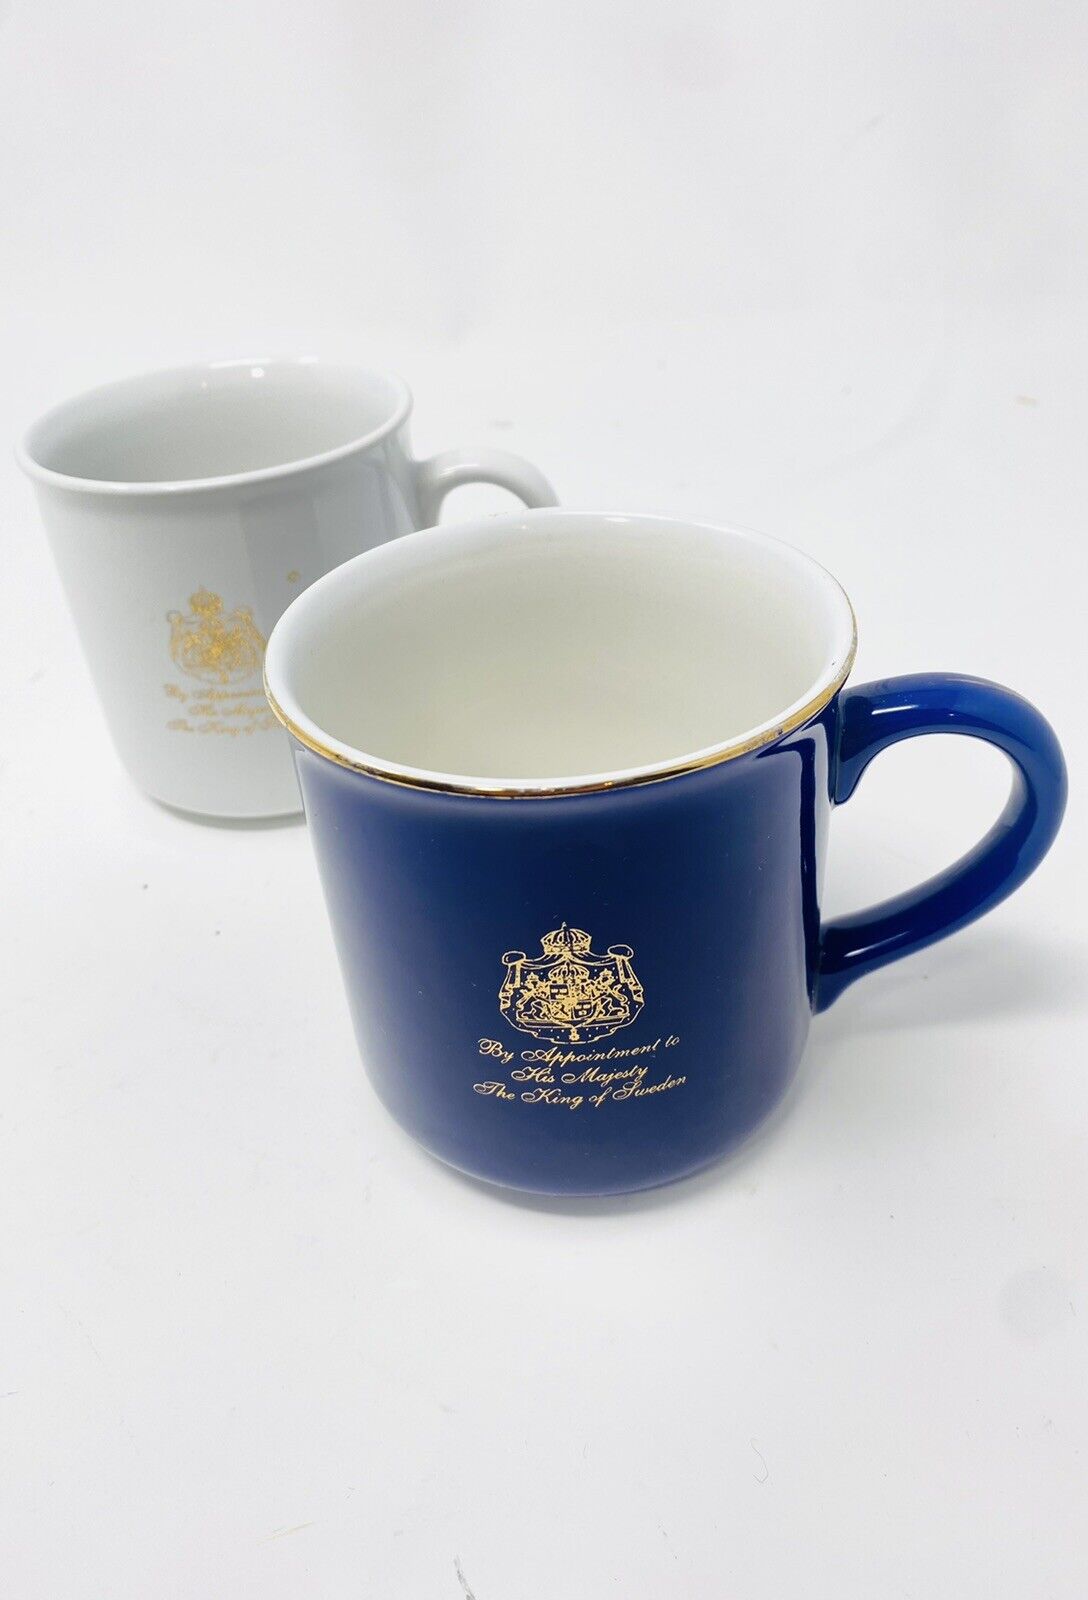 Vintage Mug Set Gevalia kaffe By Appointment to His Majesty The King Of Sweden  